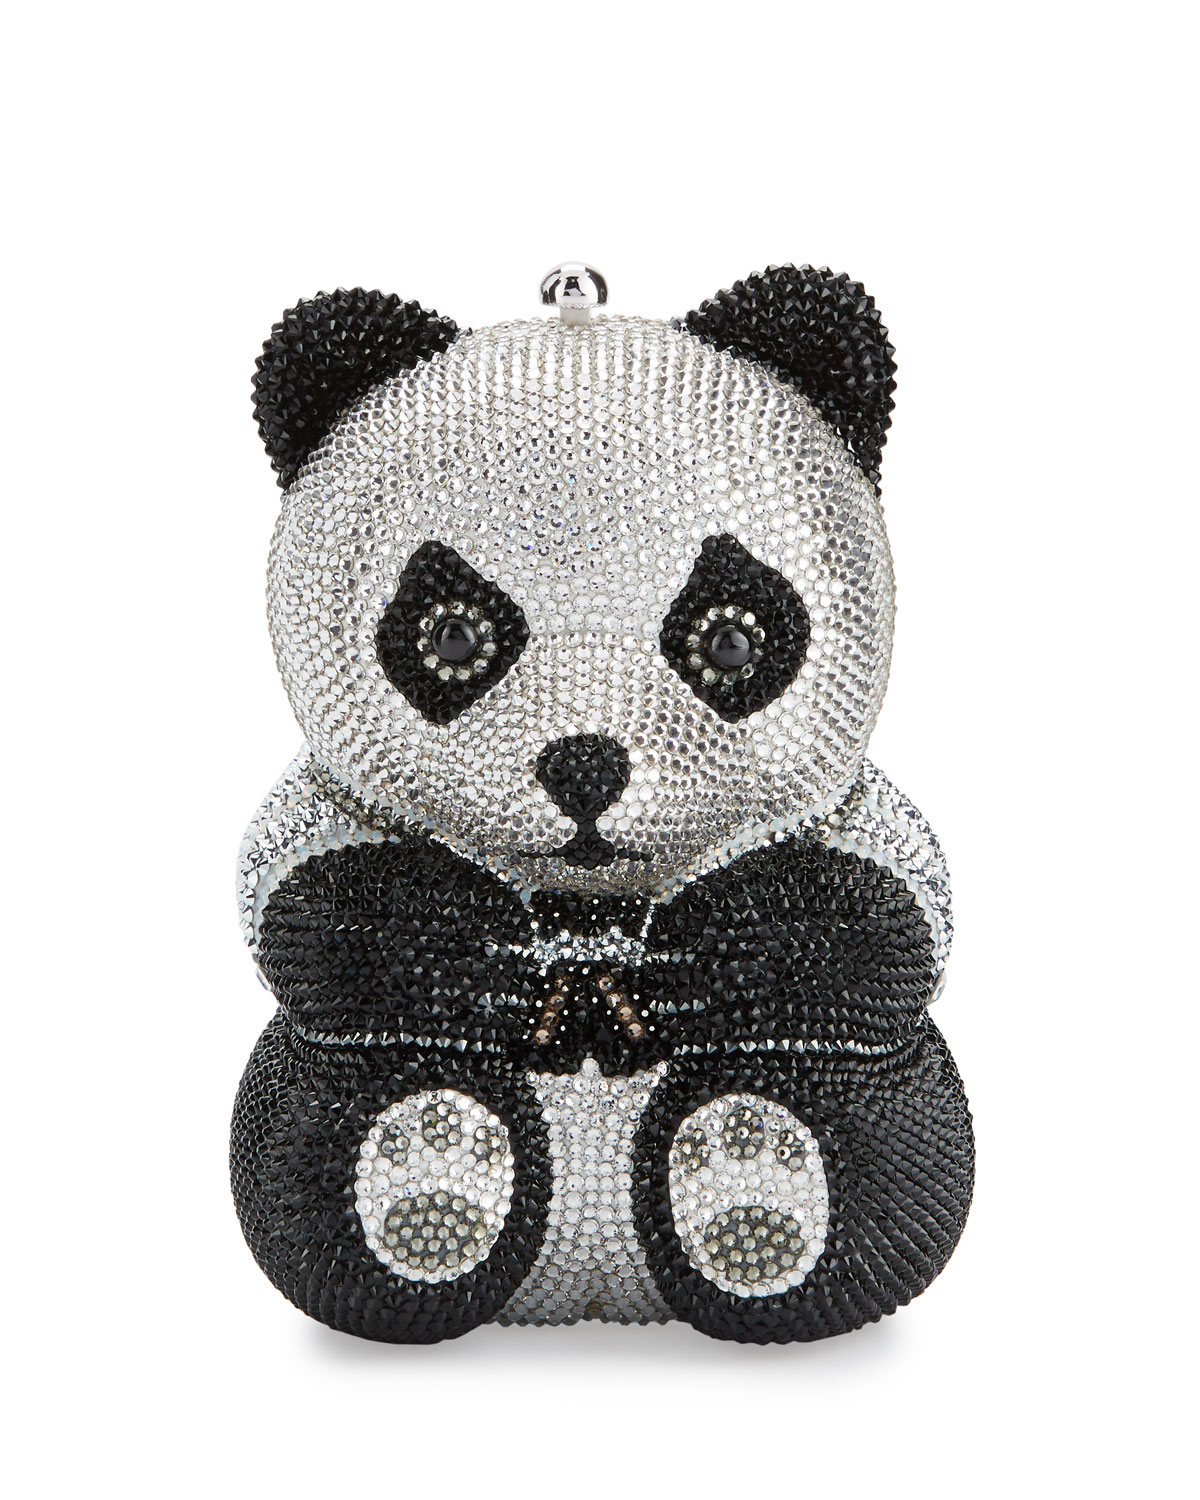 Ling Panda Evening Clutch Bag, Black/White